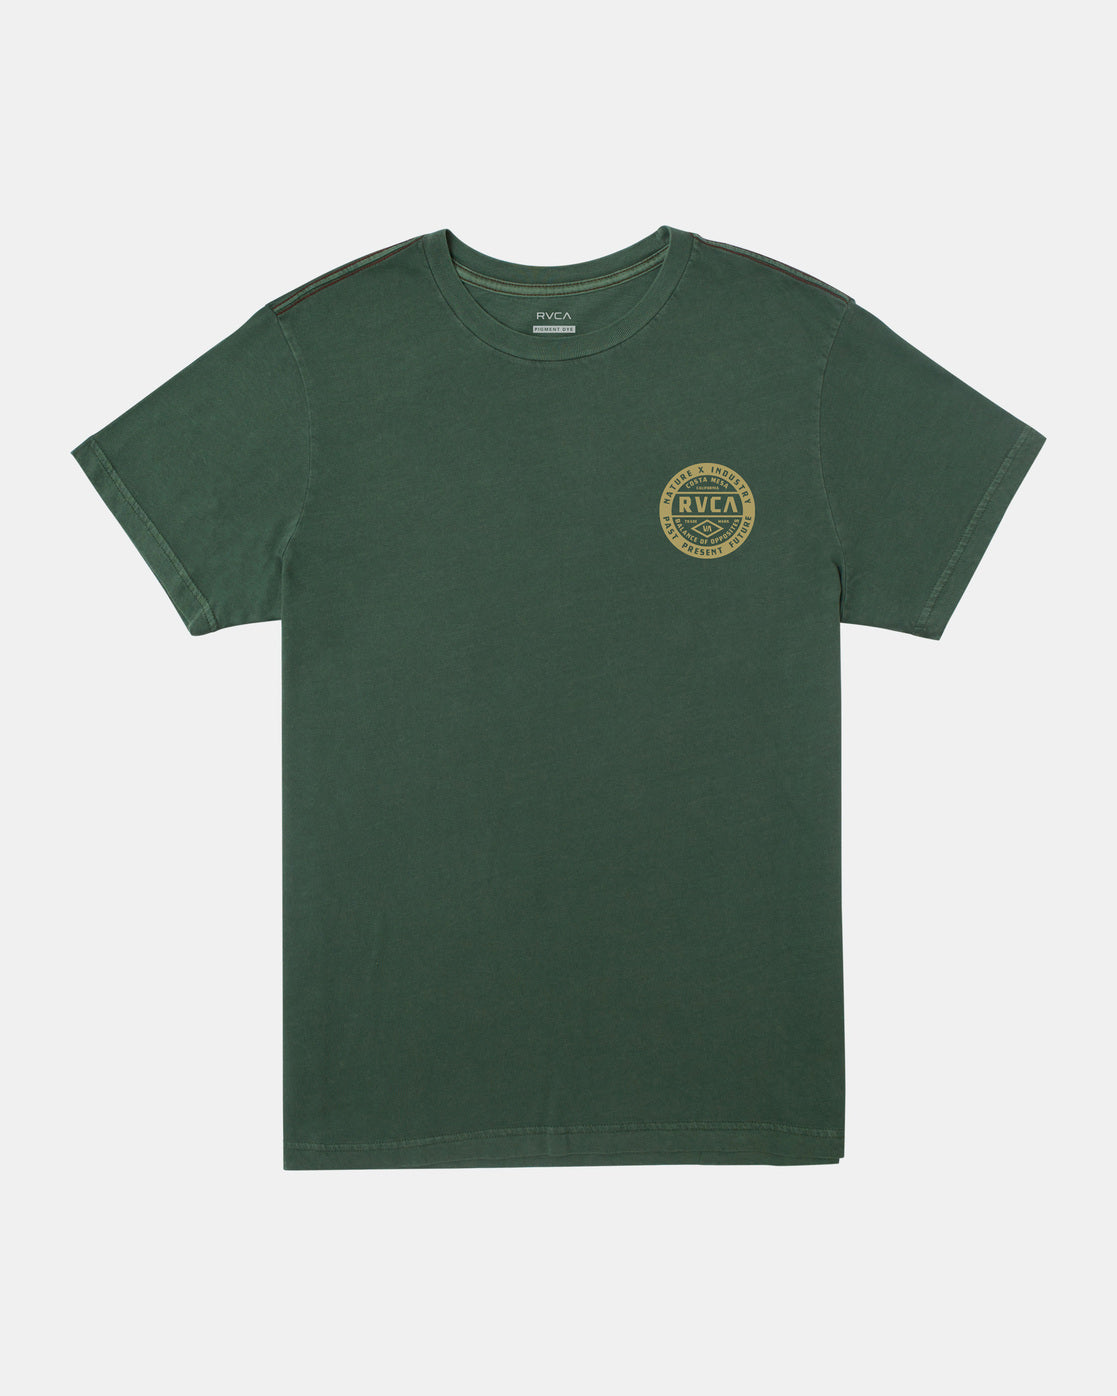 RVCA Standard Issue Men's Tee - College Green Mens T Shirt